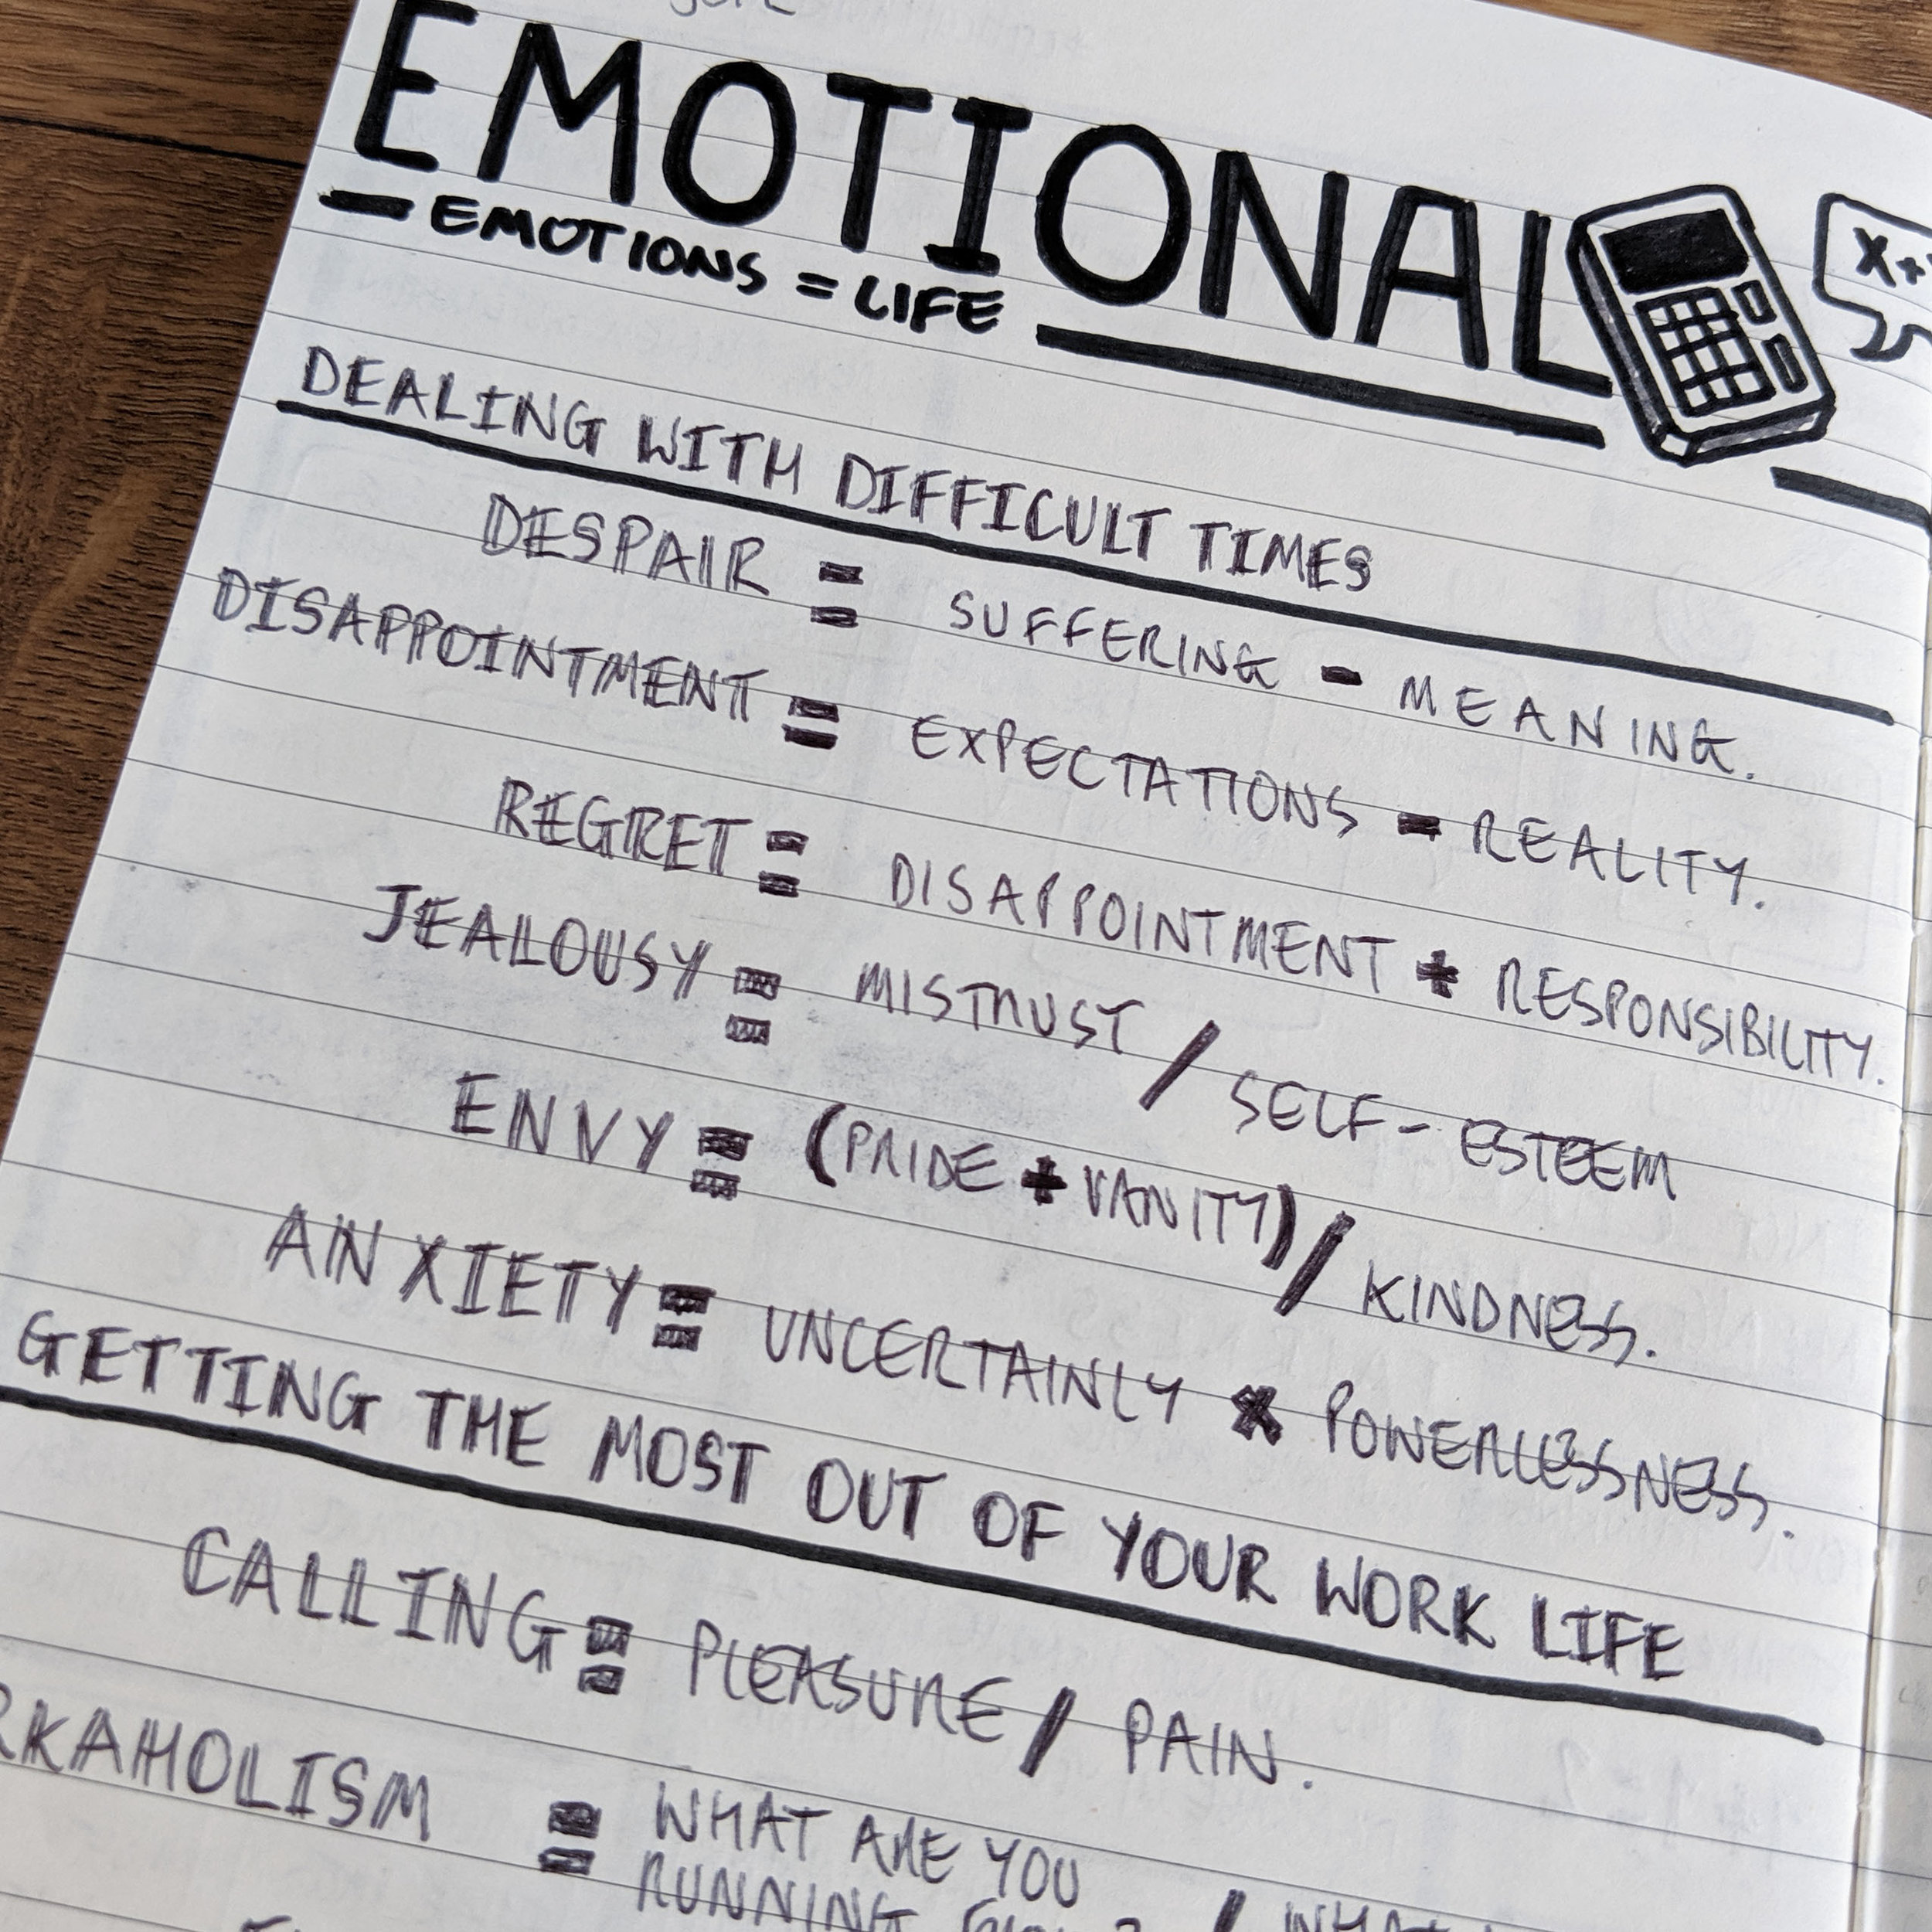 EmotionalEquations2.jpg